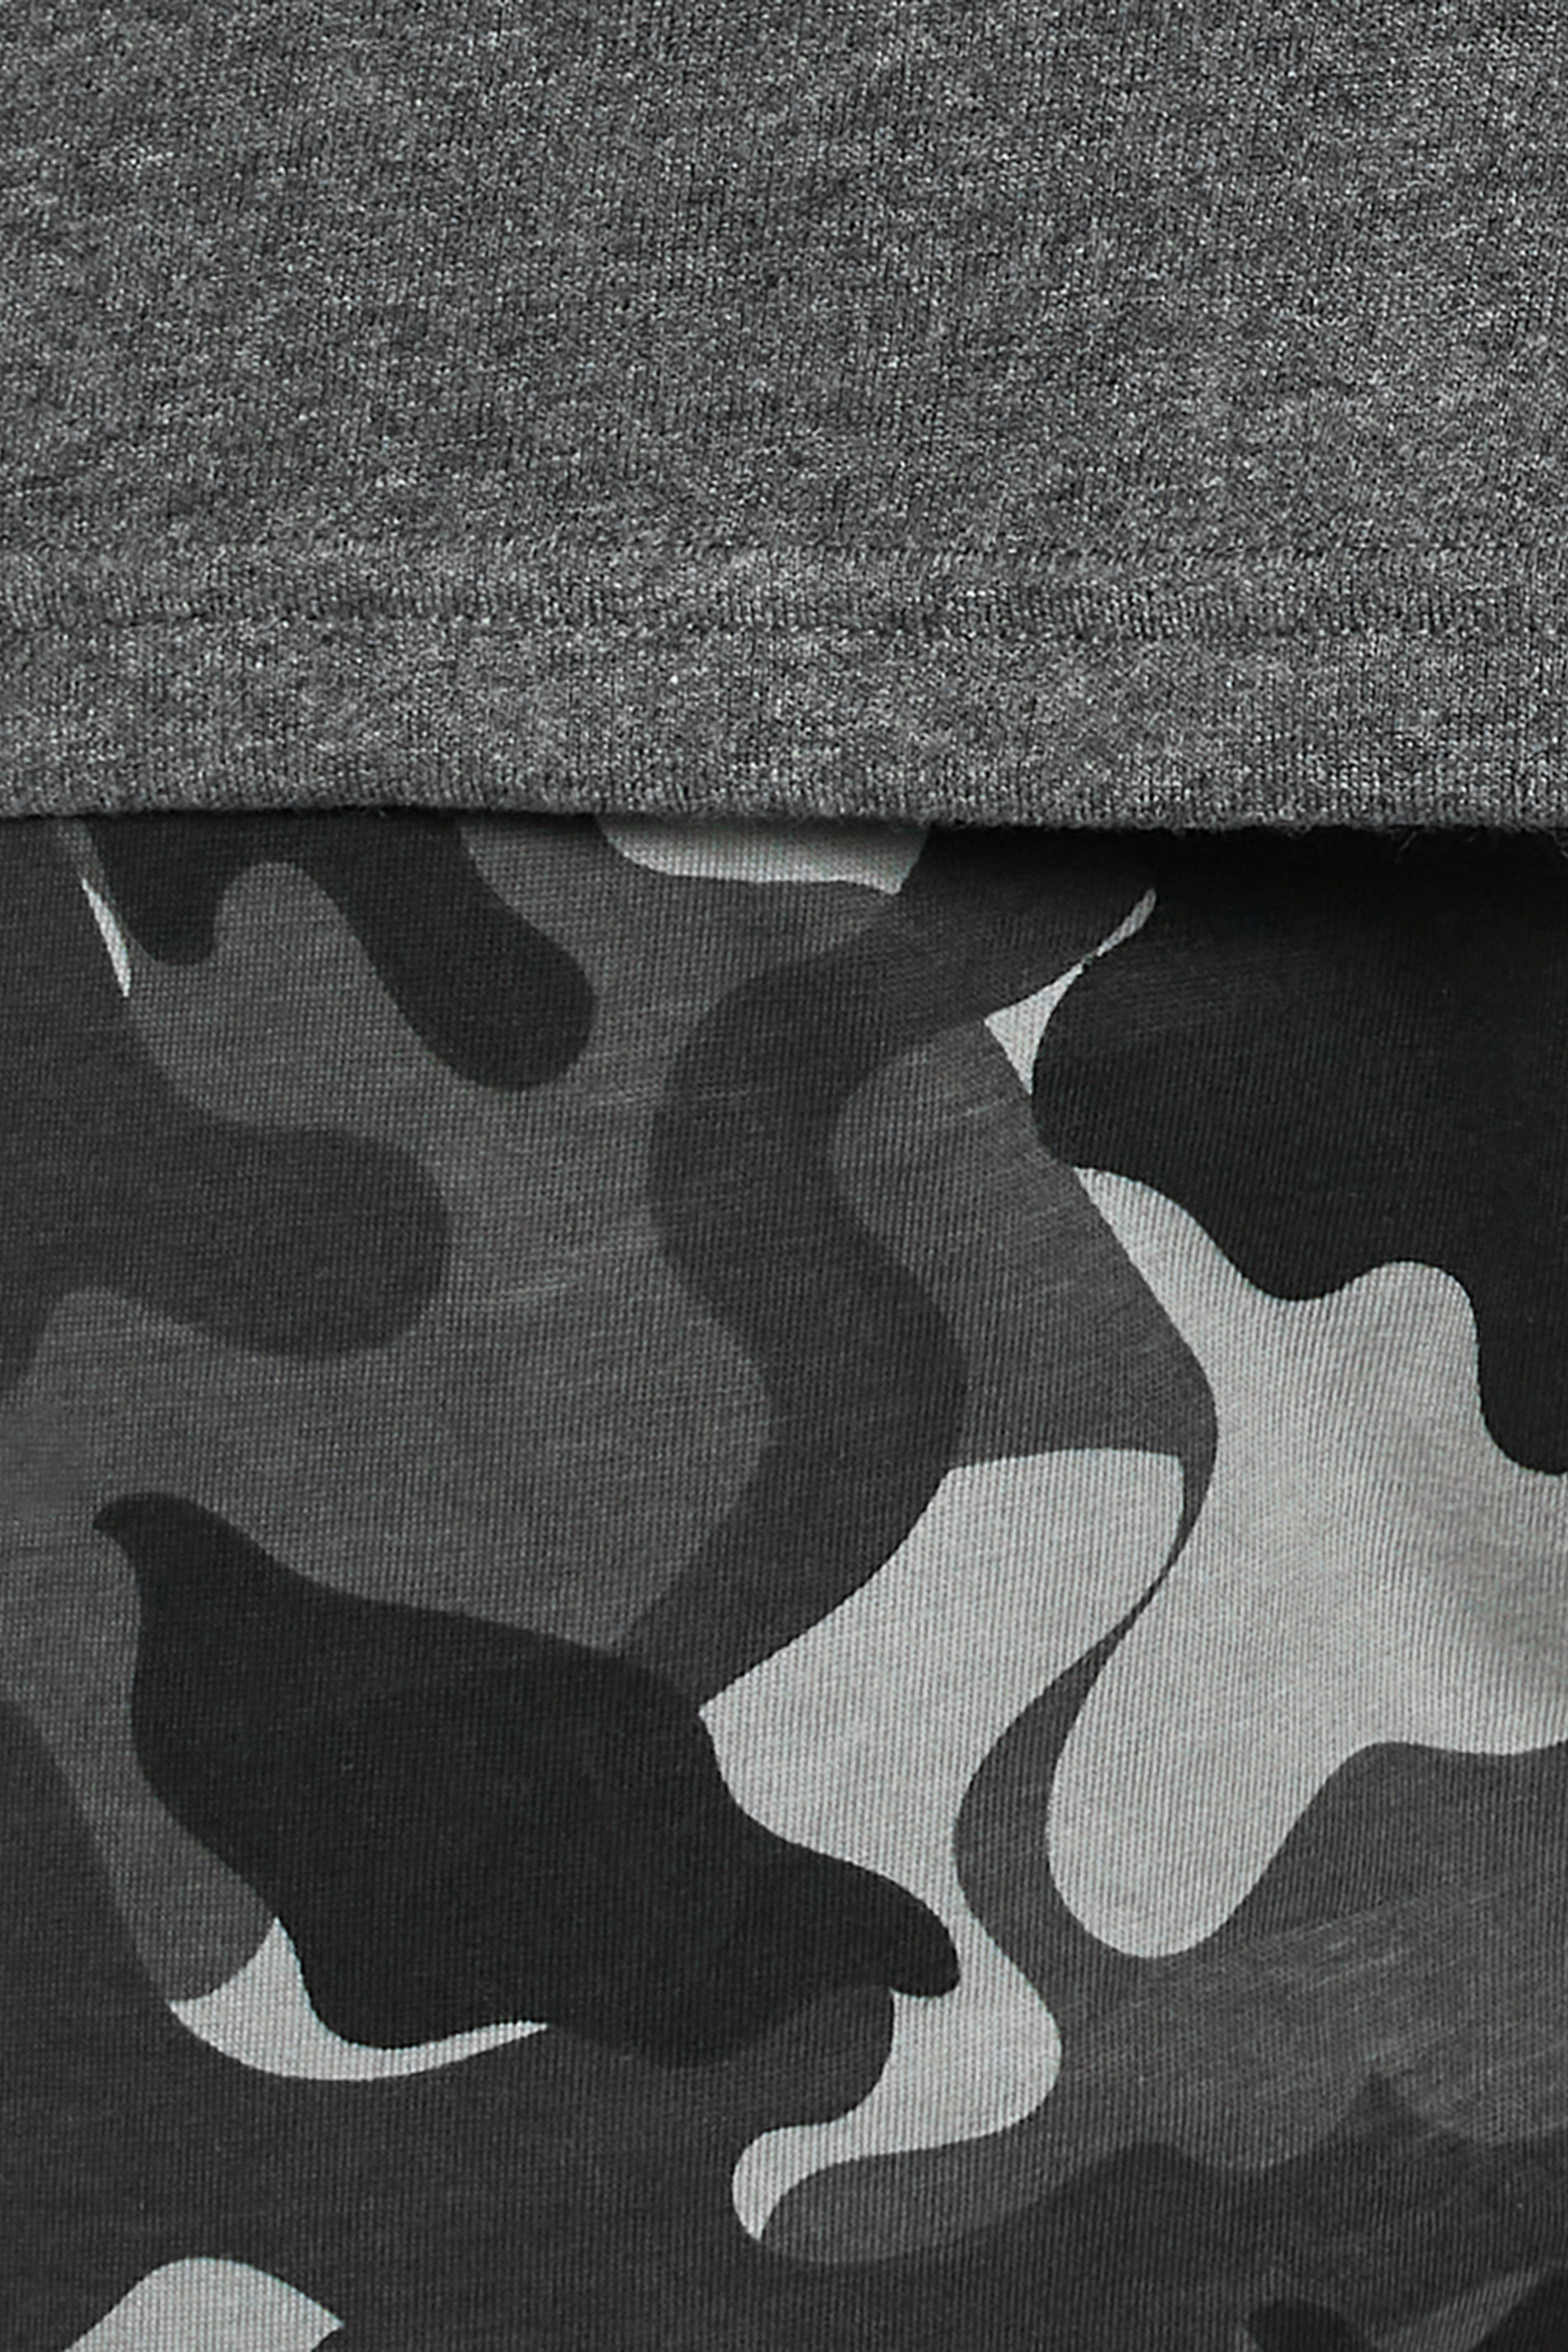 BadRhino Big & Tall Grey Camo Print Shorts and T-Shirt Pyjama Set | BadRhino 2